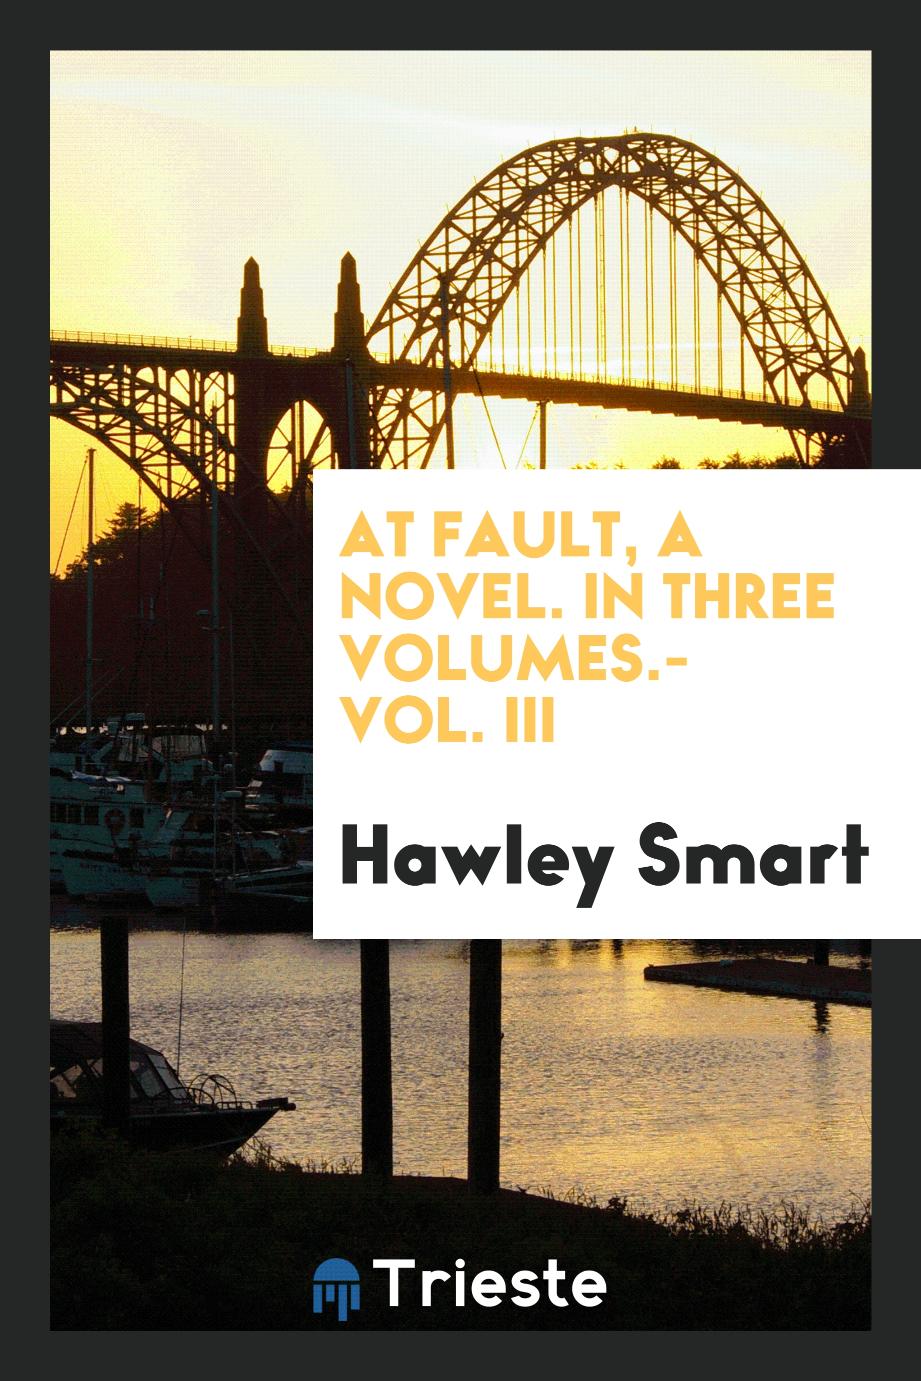 At fault, a novel. In Three Volumes.- Vol. III